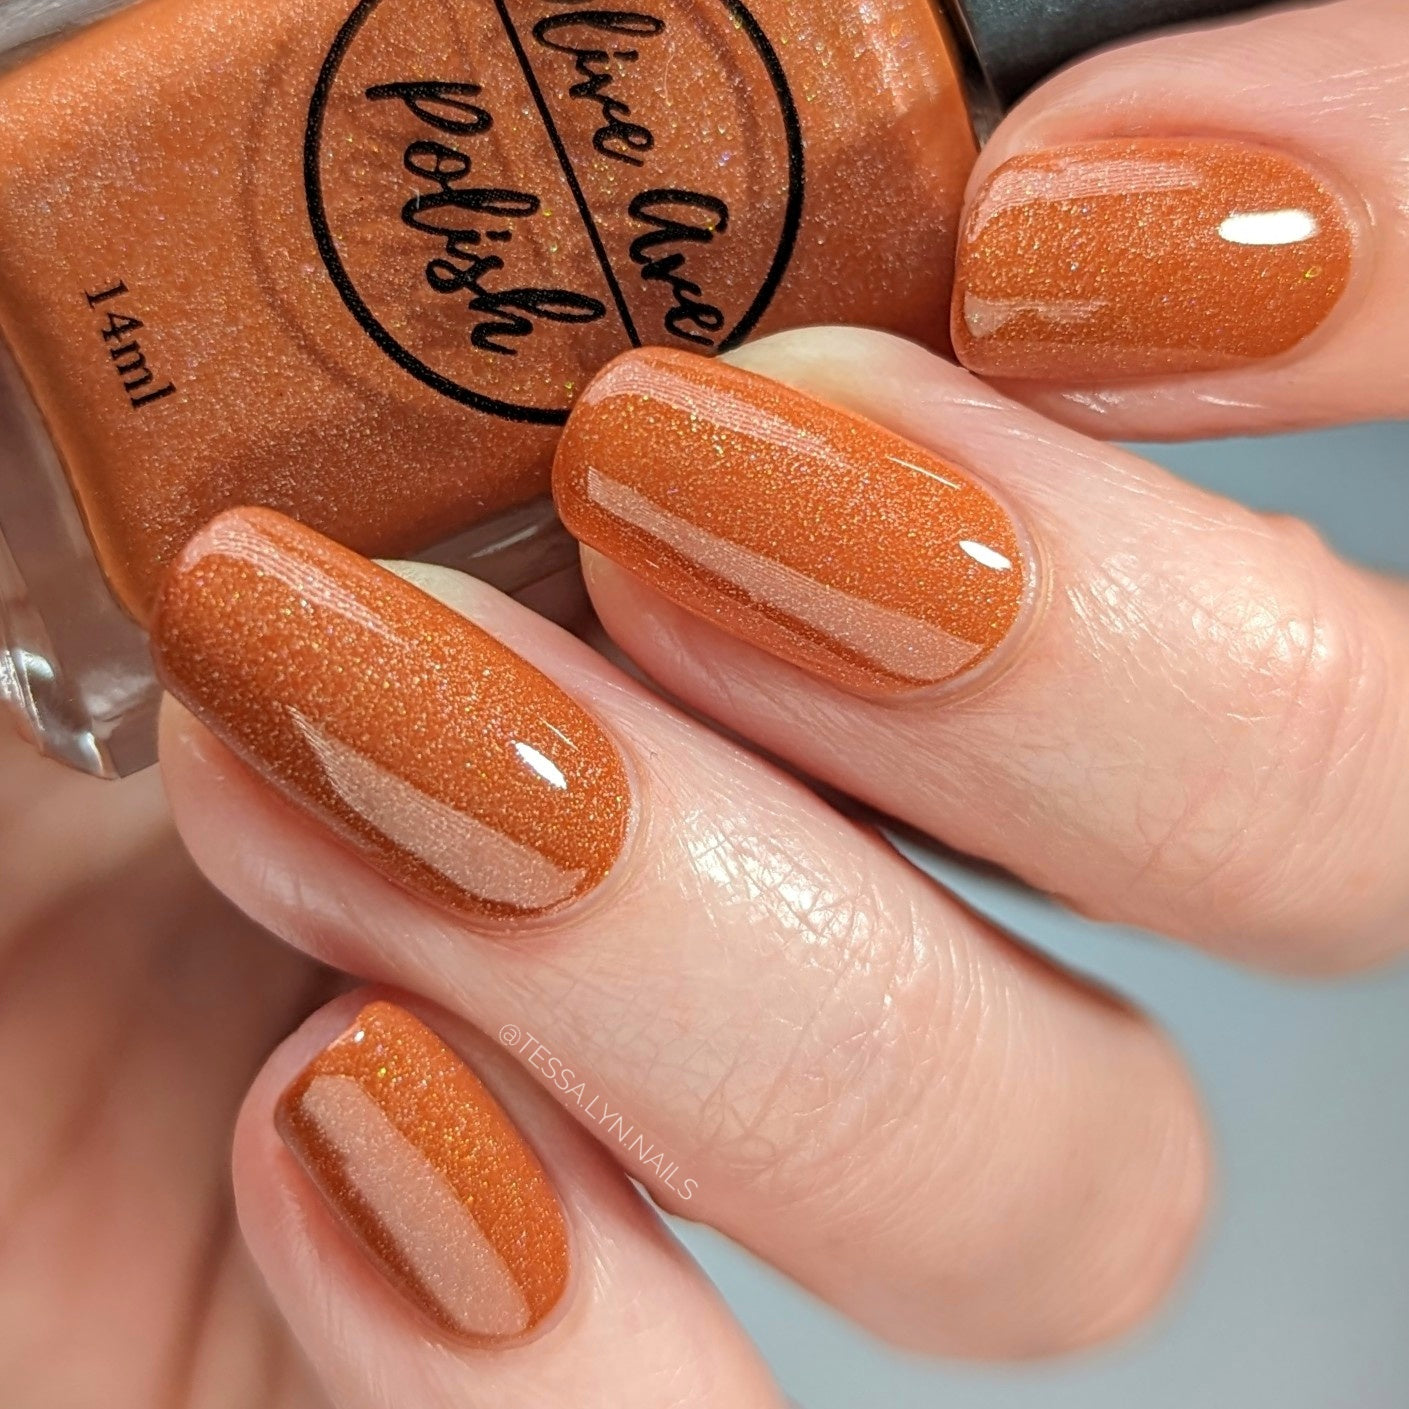 orange holographic nail polish on pale skin tone